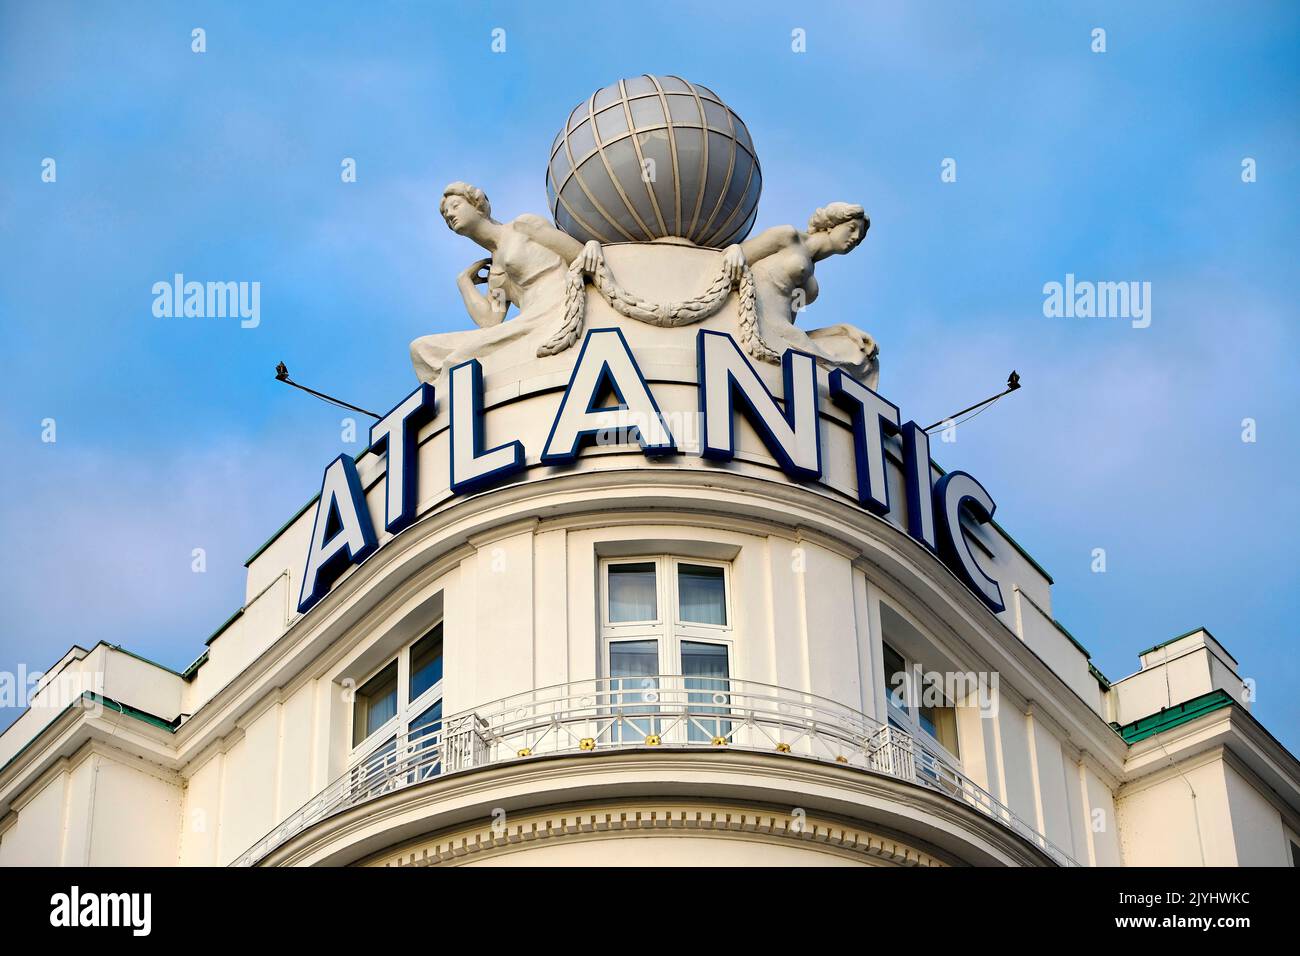 Gable of the Hotel Atlantic Kempinski with globe, five-star deluxe hotel, Germany, Hamburg Stock Photo